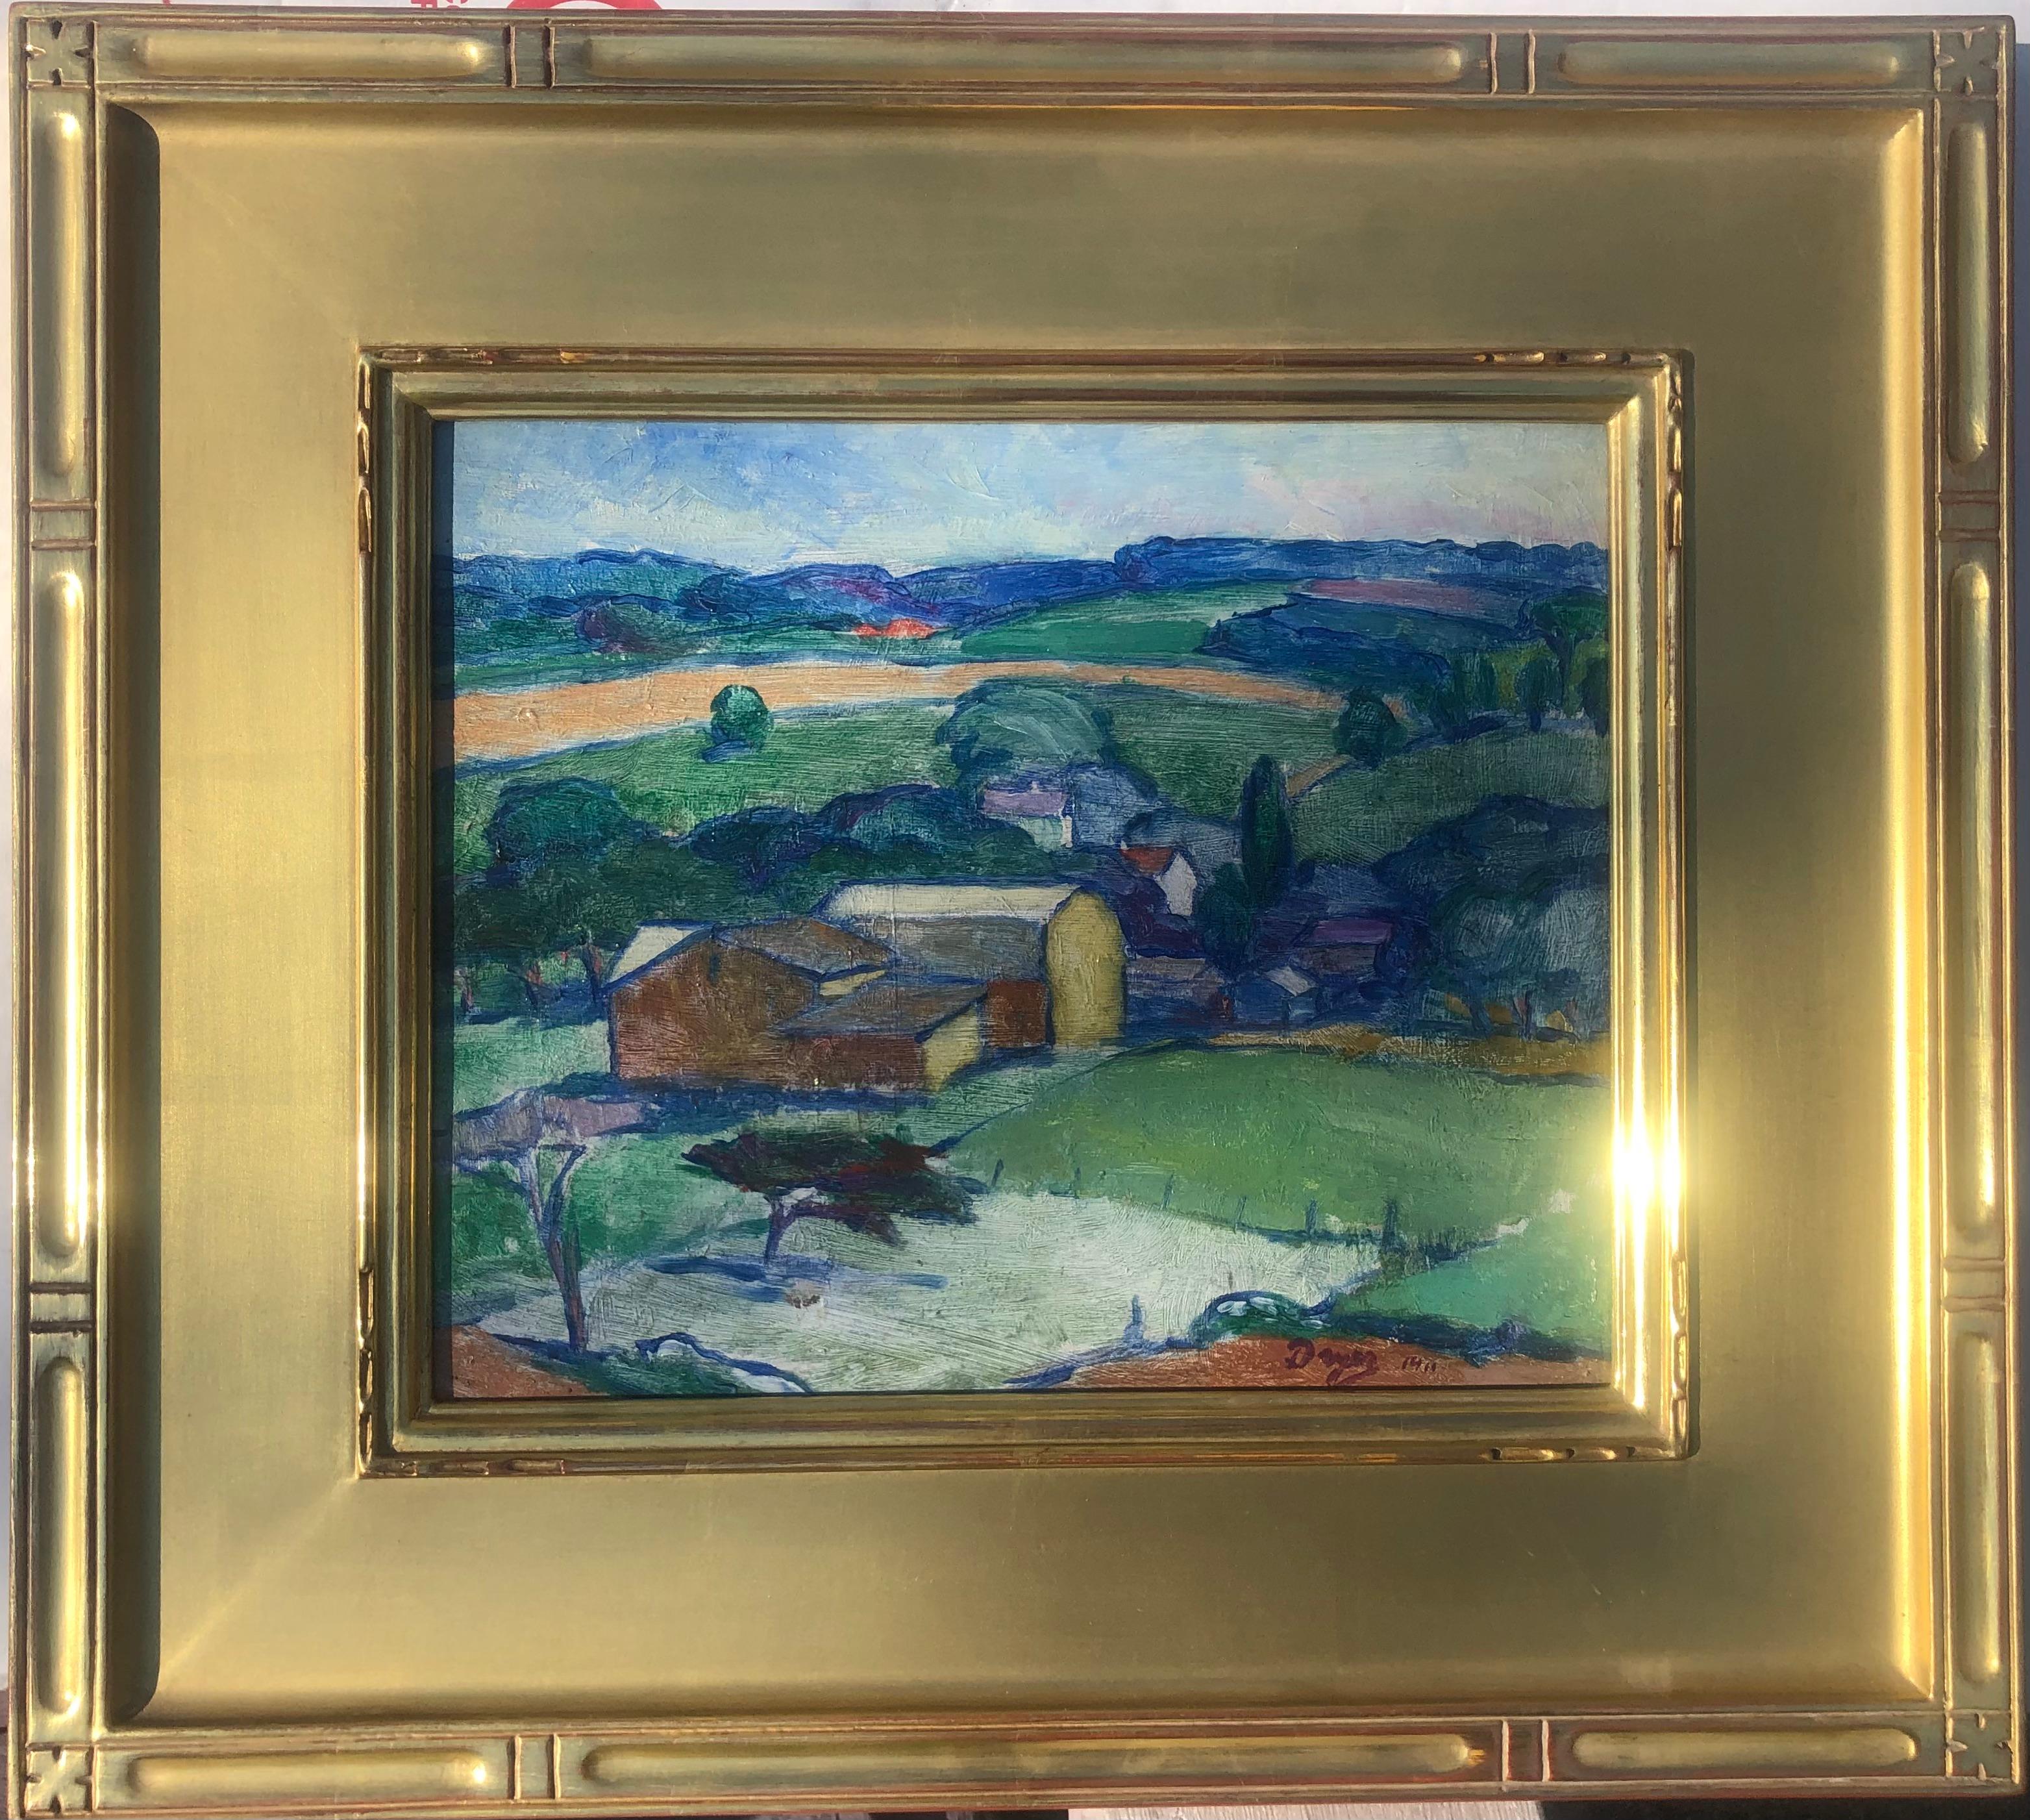 Rufus Dryer, French Impressionist School O/B Landscape - 1911 - After Cezanne, 1911